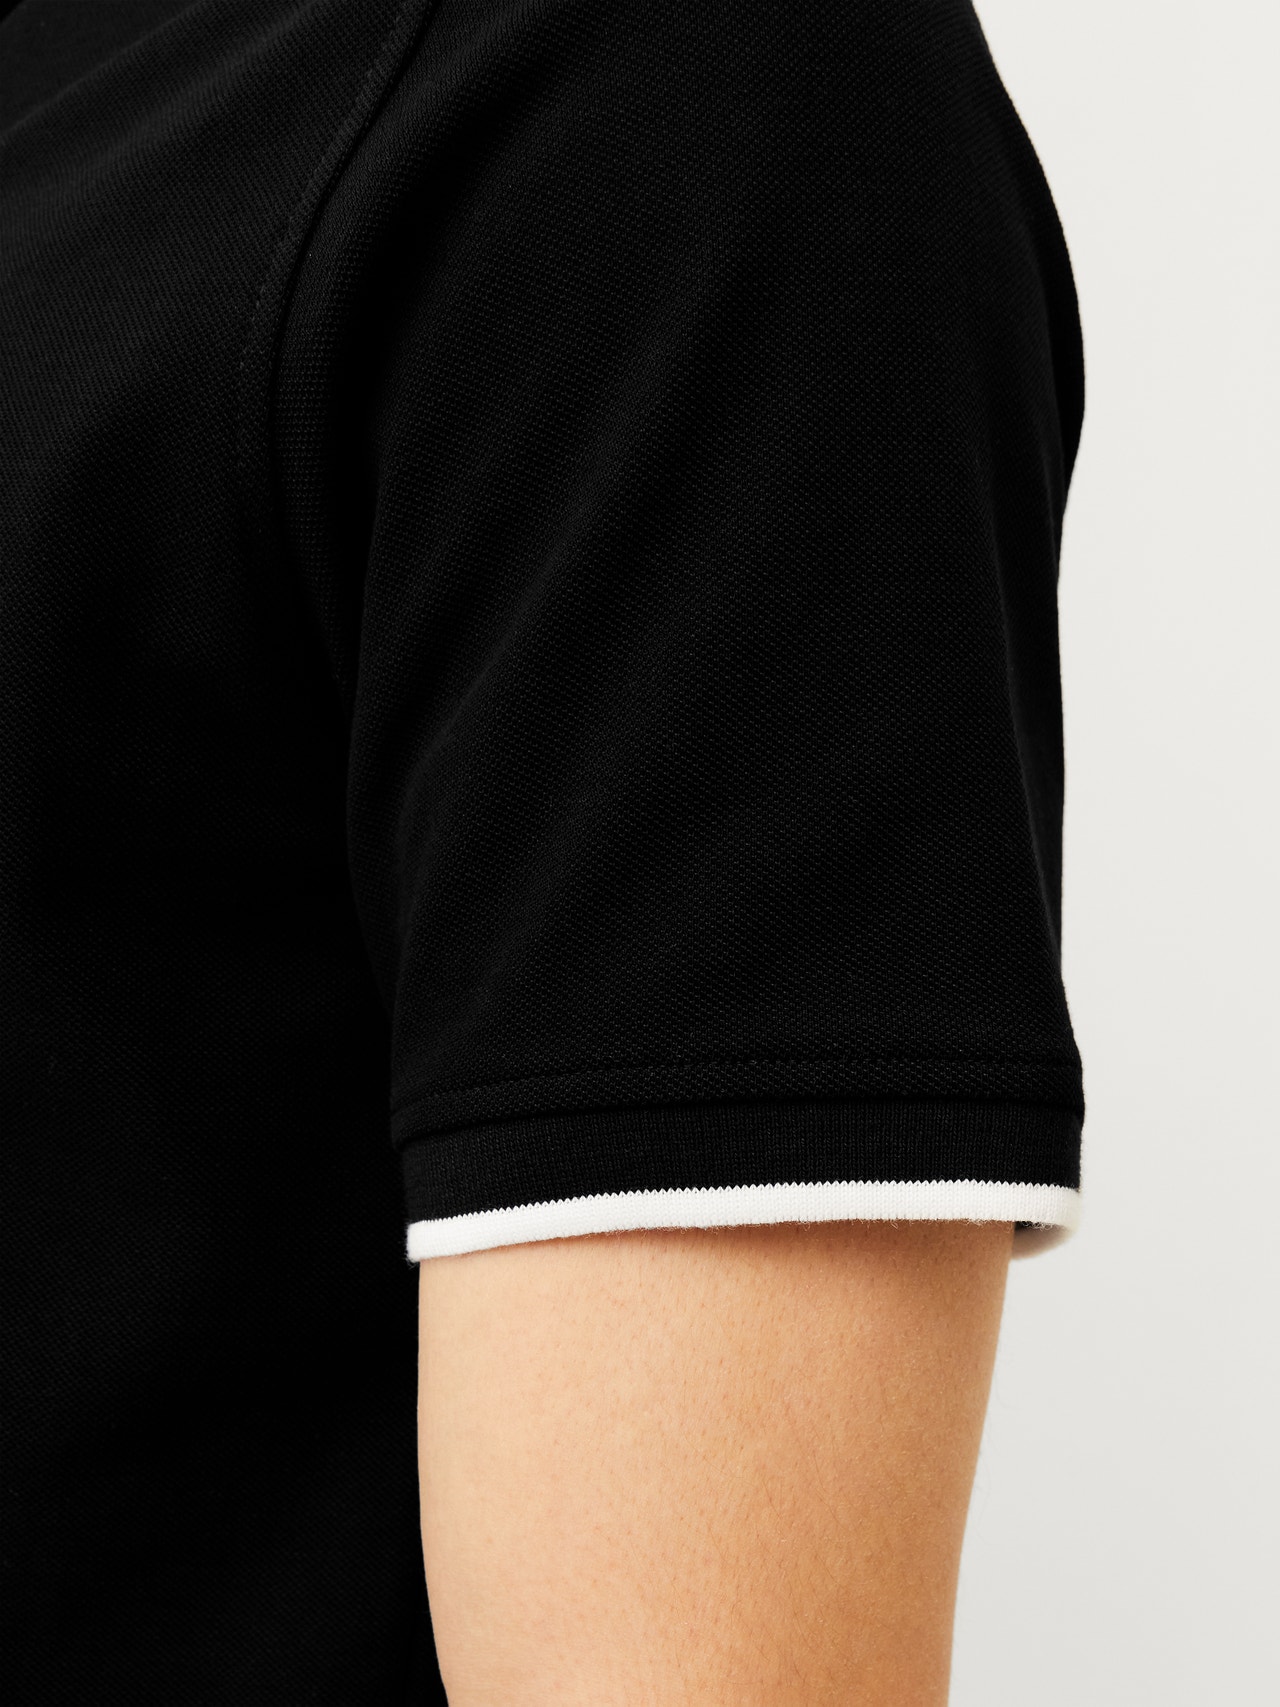 Jack & Jones Gładki Polo T-shirt -Black - 12199711